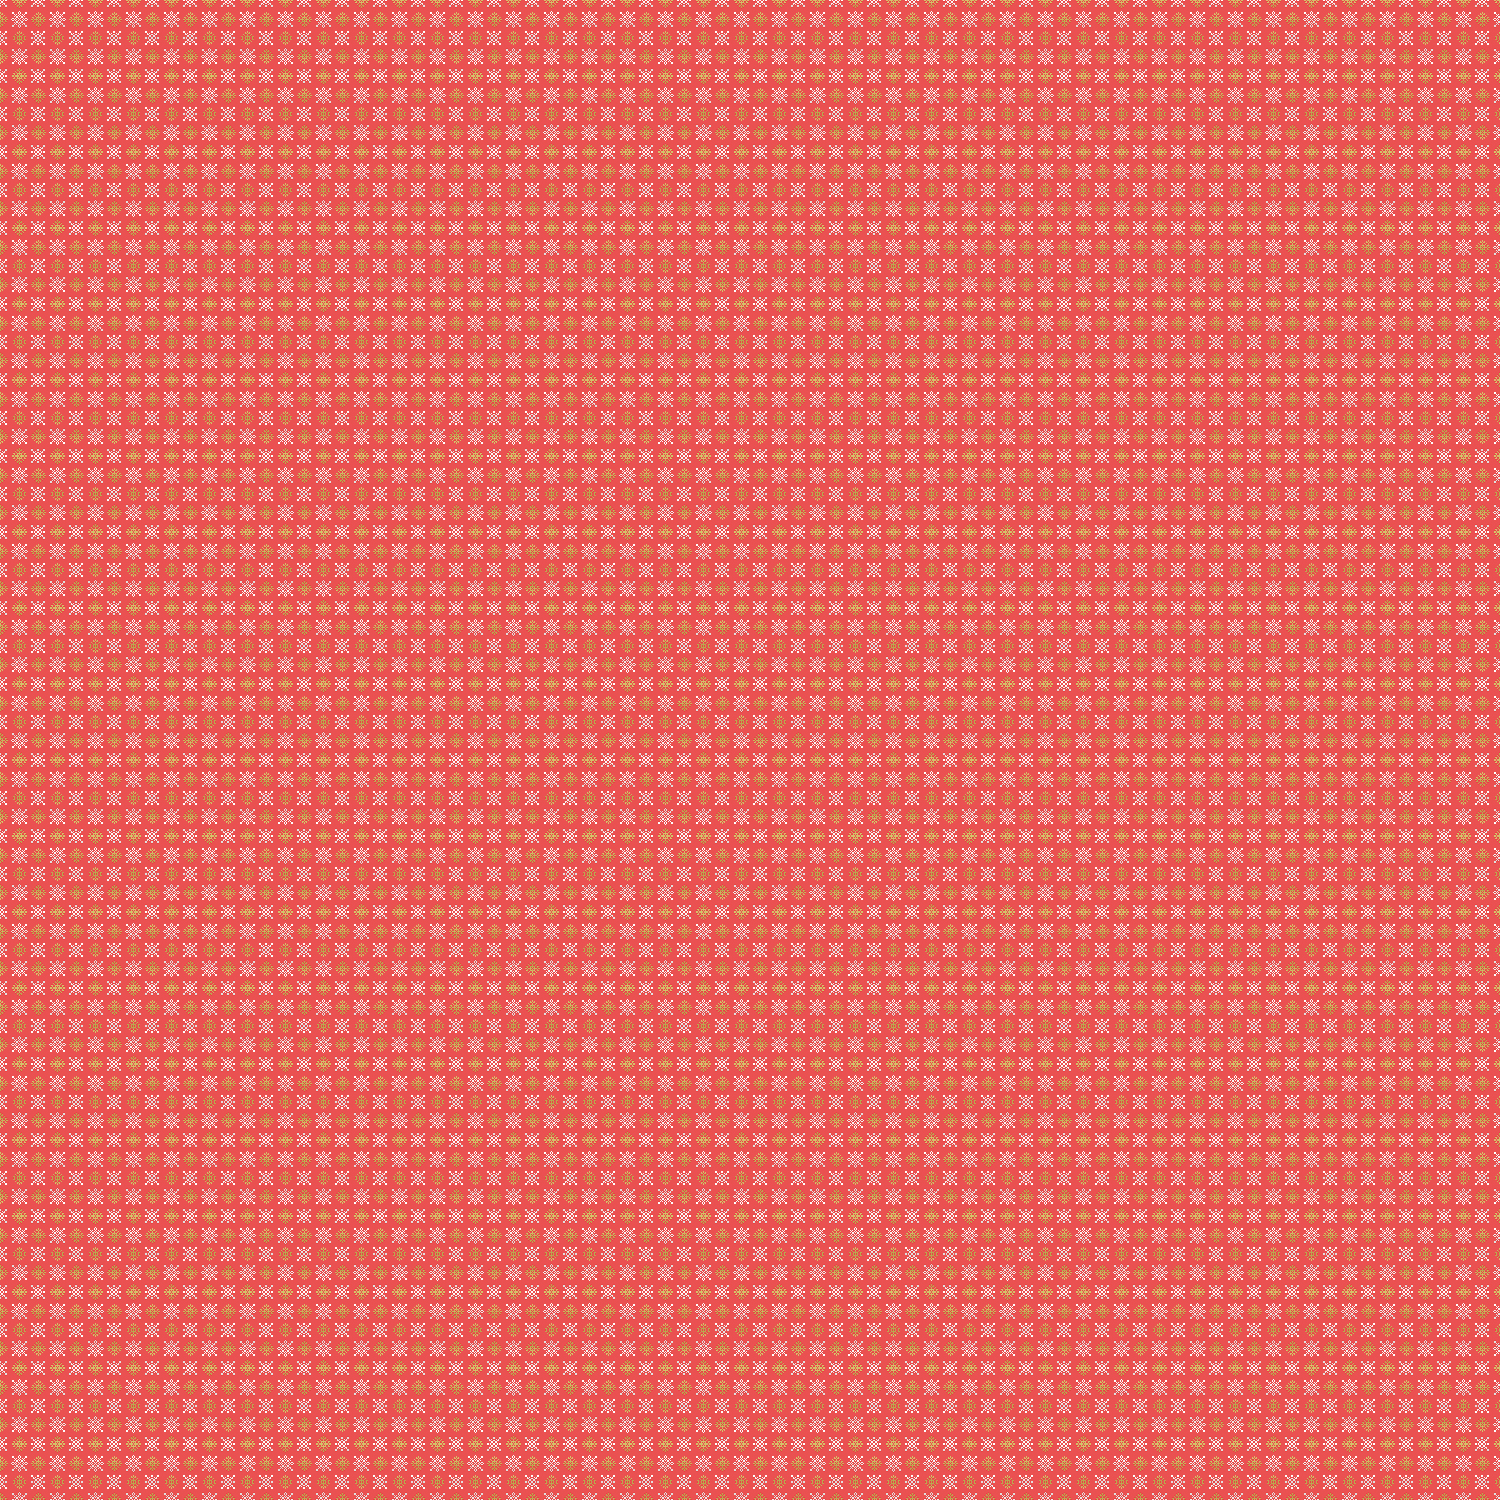 Christmas Background Wallpaper Photoshop Patterns